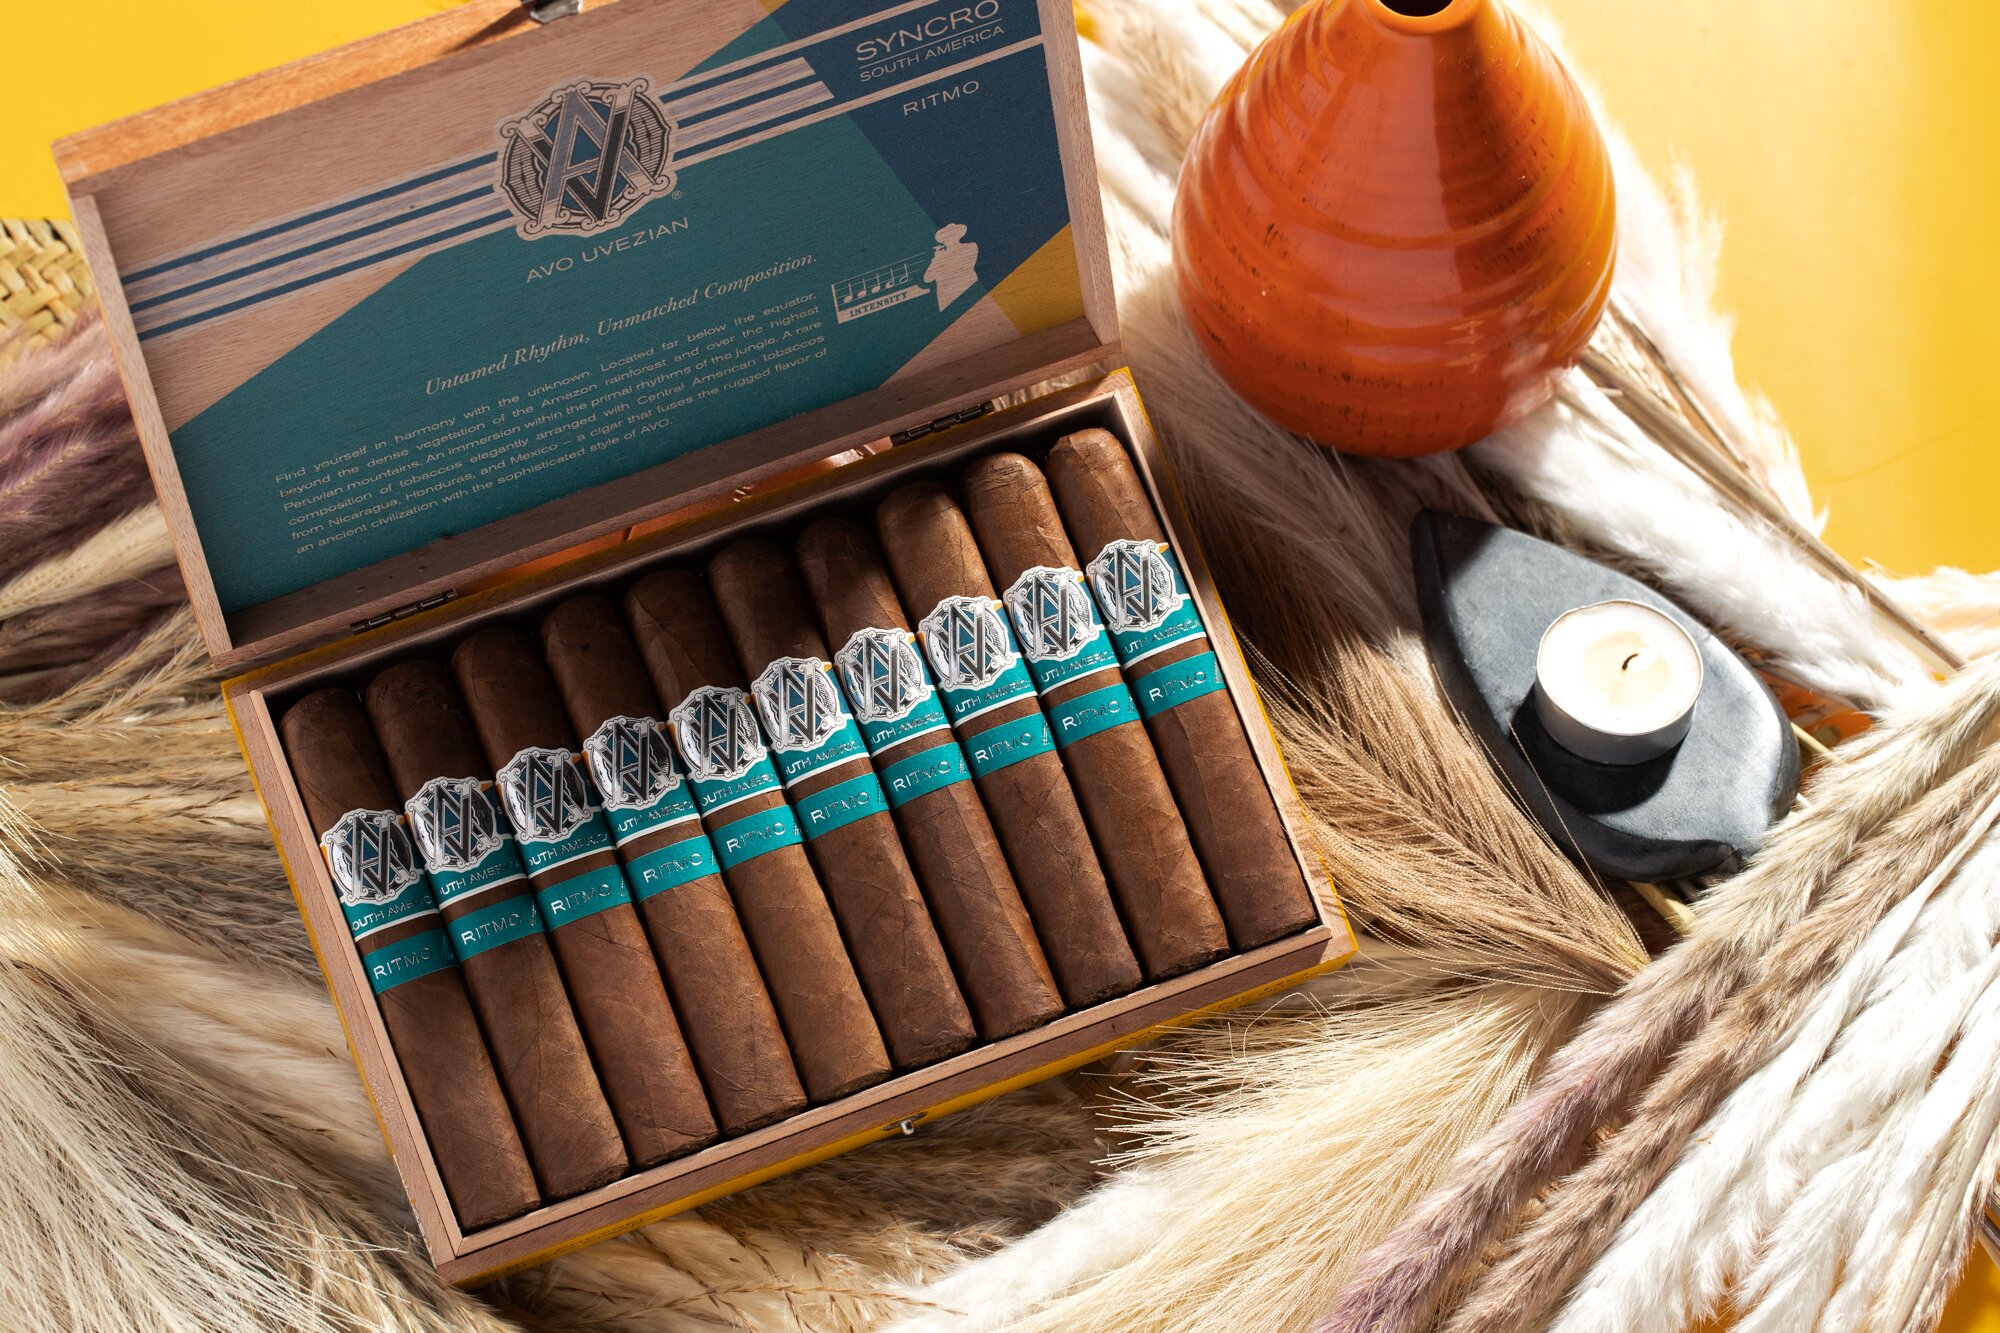 Open Box of AVO Syncro Ritmo South America cigars